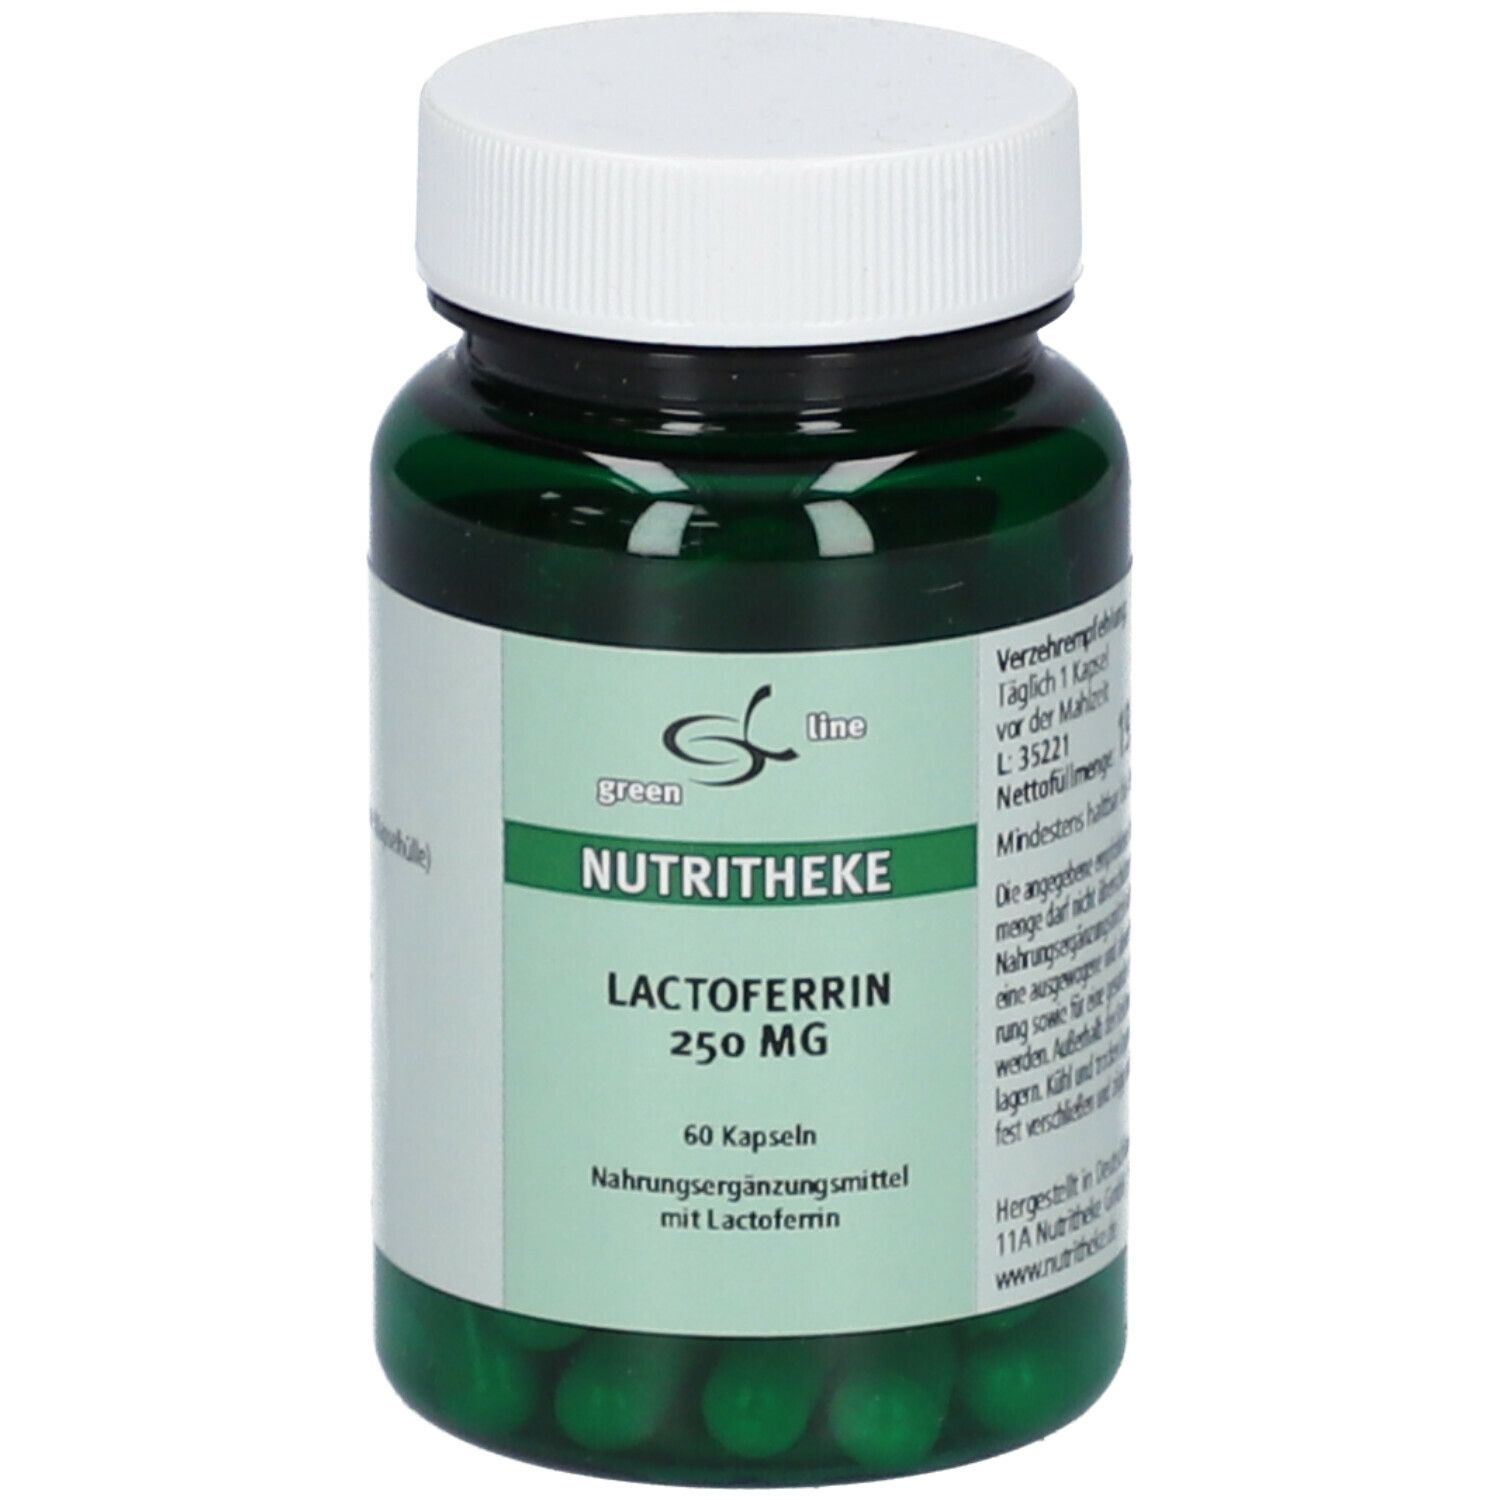 Image of green line LACTOFERRIN 250 mg